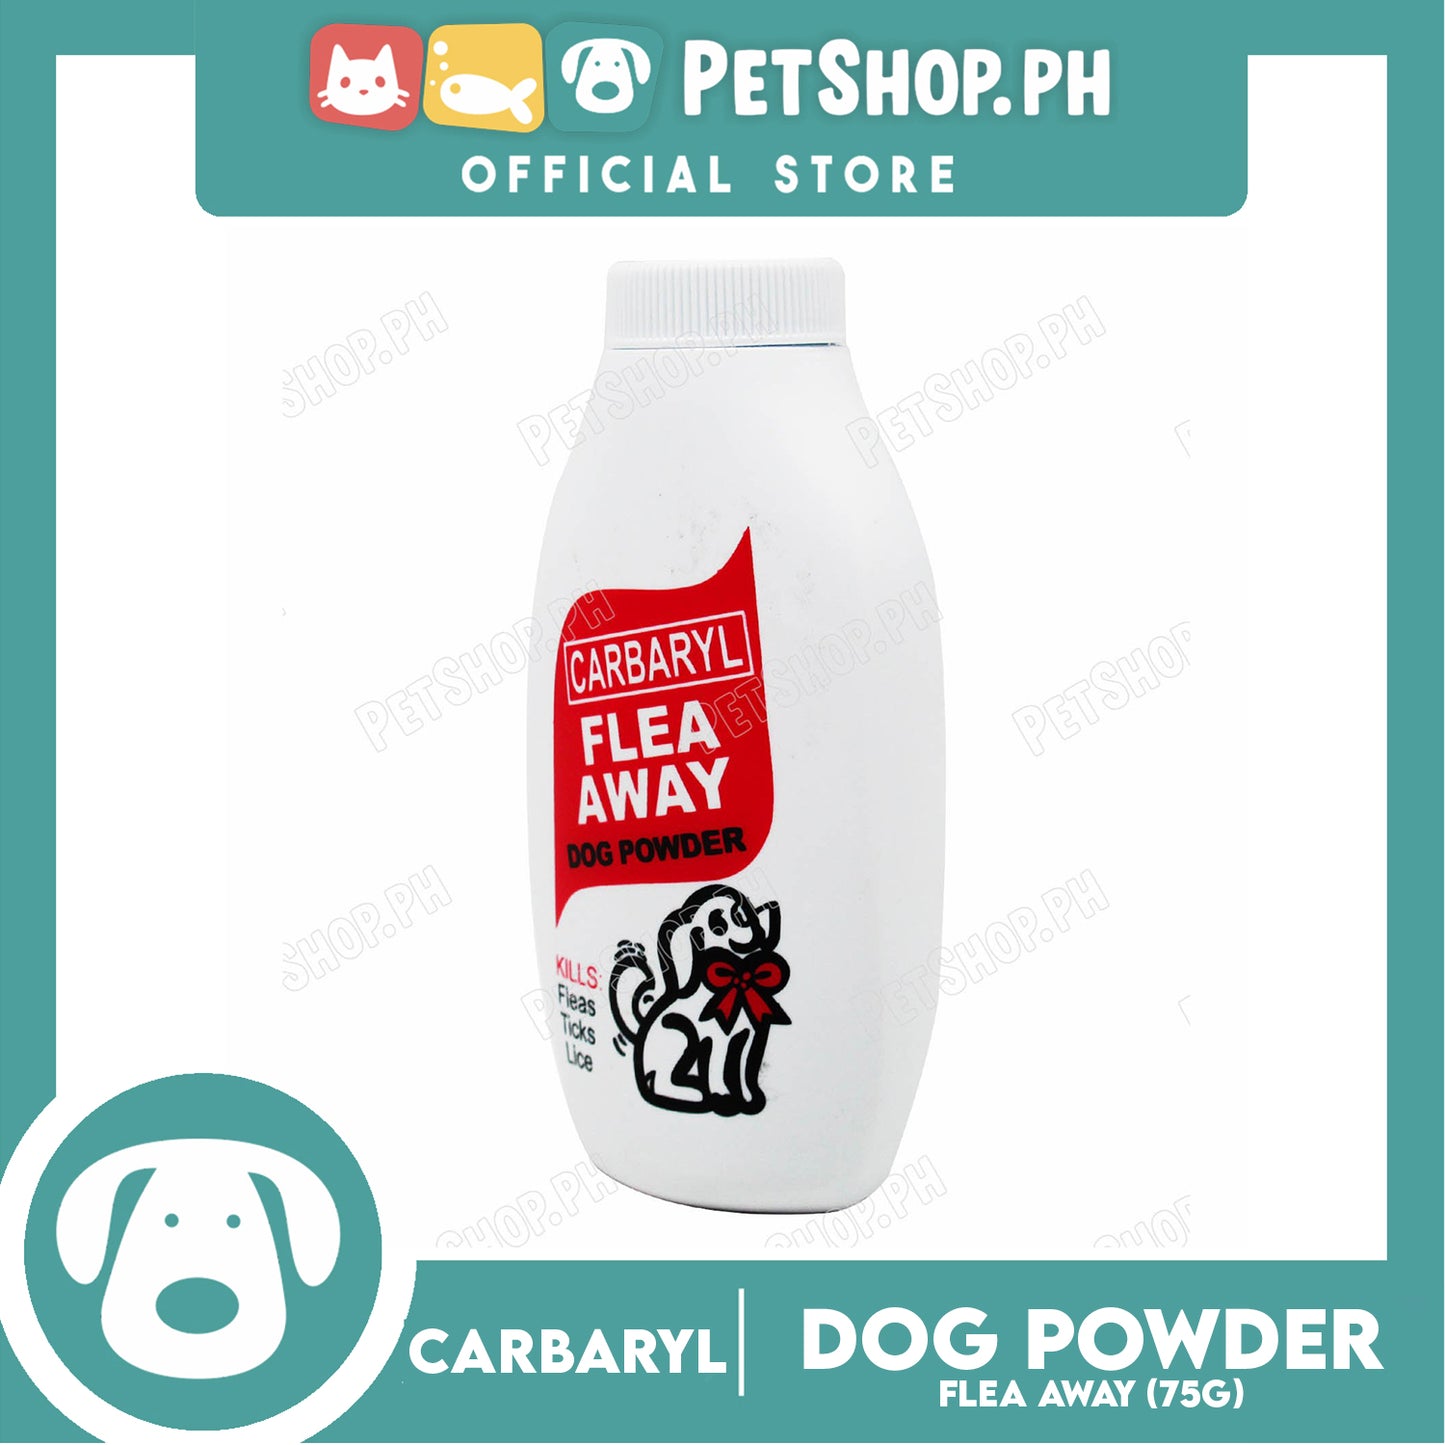 Cabaryl Flea Away Dog Powder